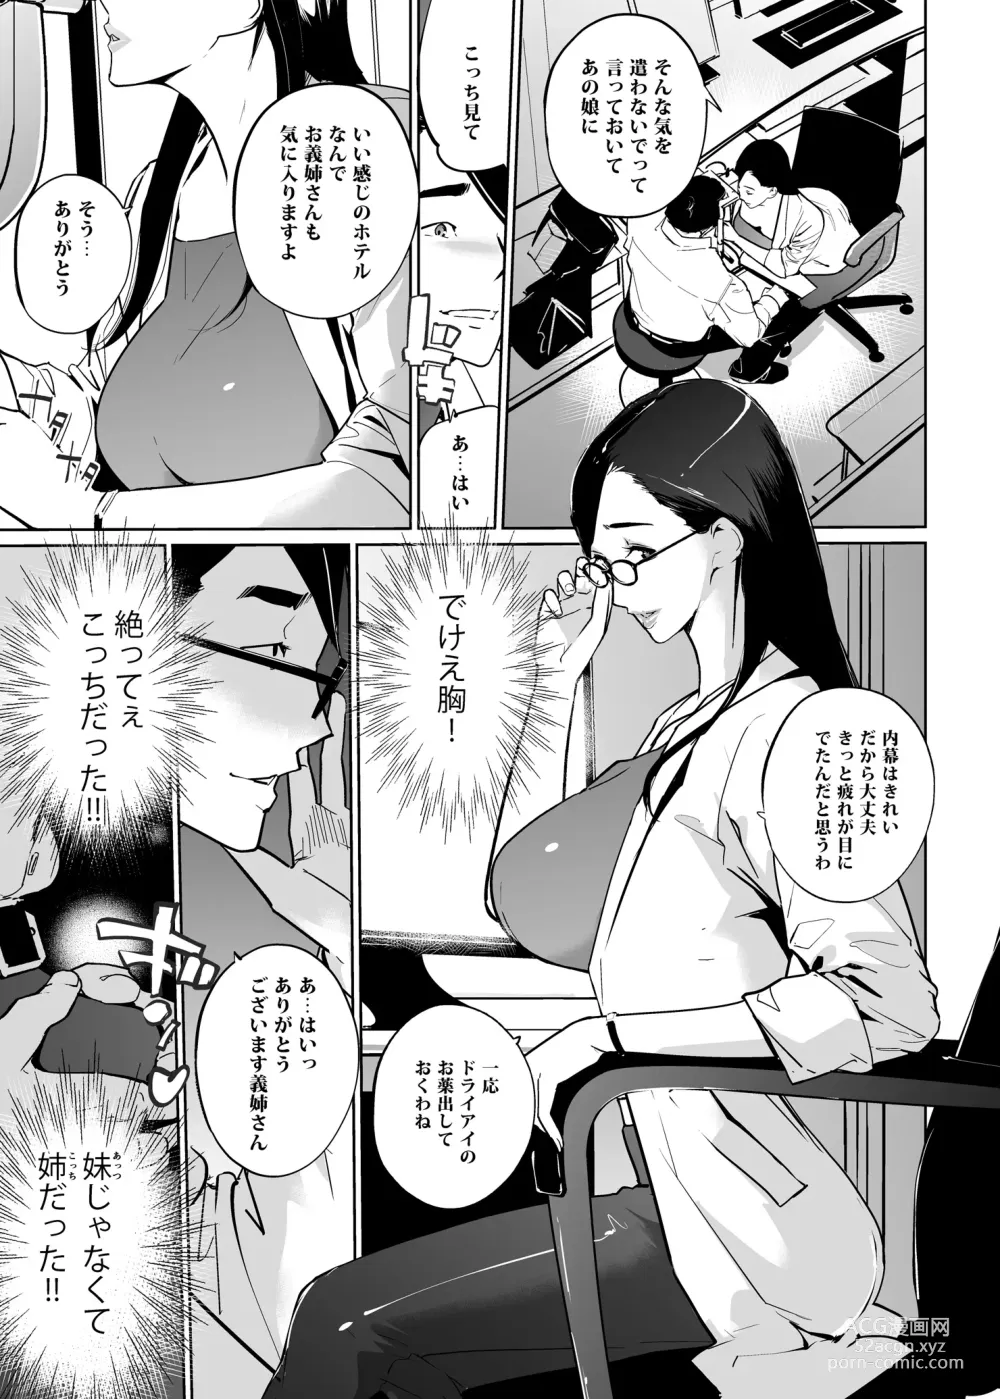 Page 11 of doujinshi NTR Midnight Pool Season 2 #1